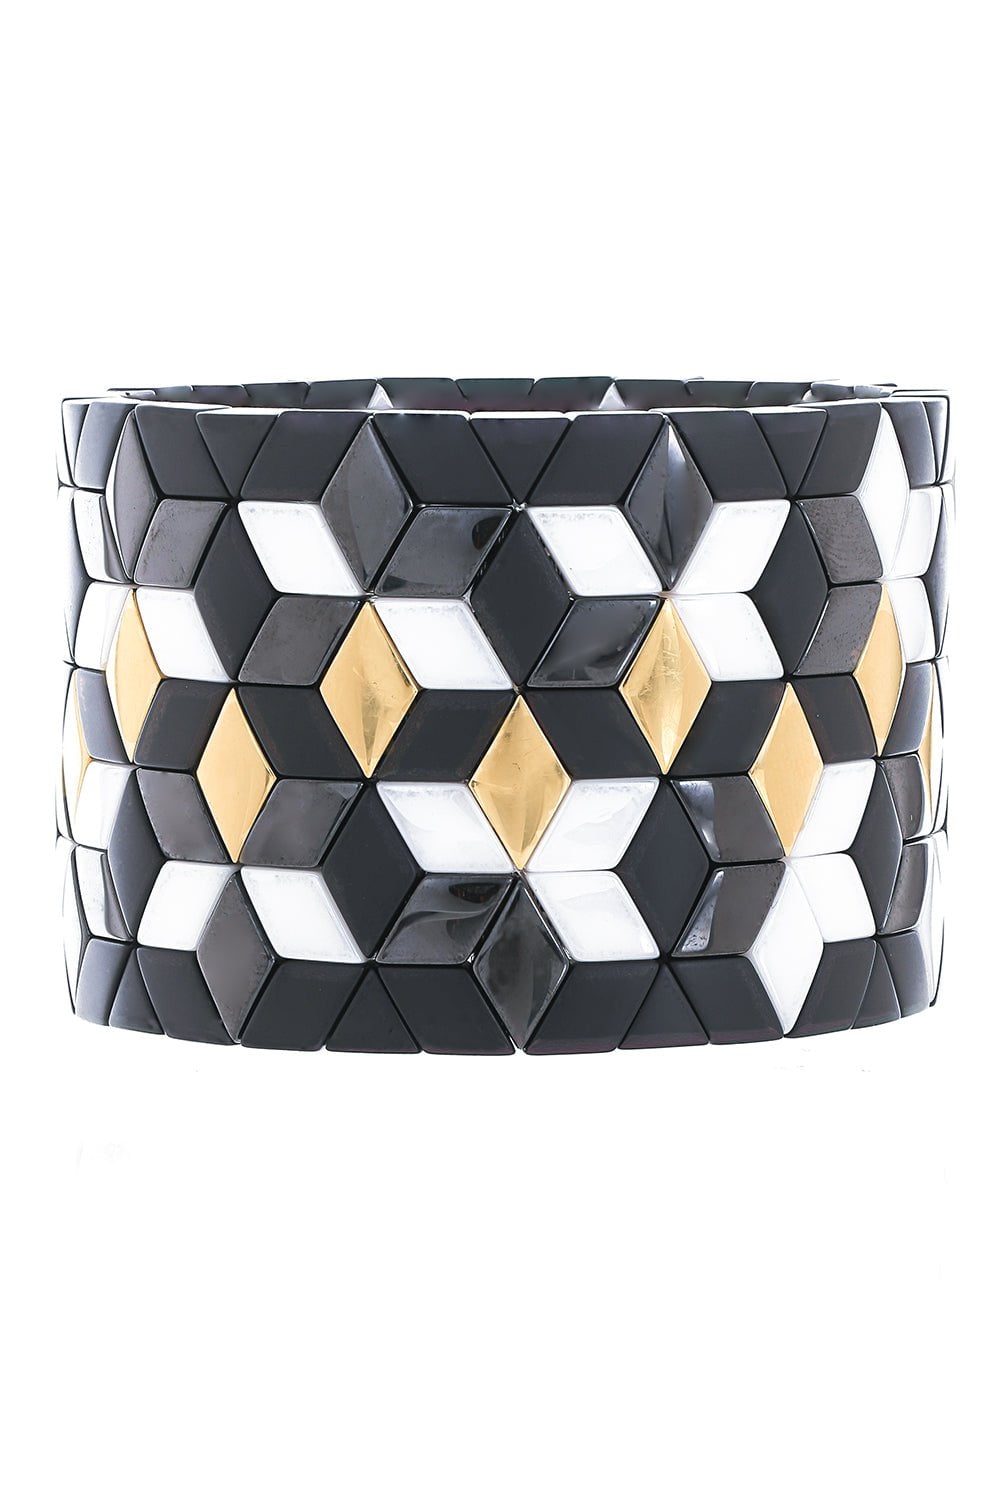 ROBERTO DEMEGLIO-Cube Stretch Ceramic Bracelet - Yellow Gold-YELLOW GOLD